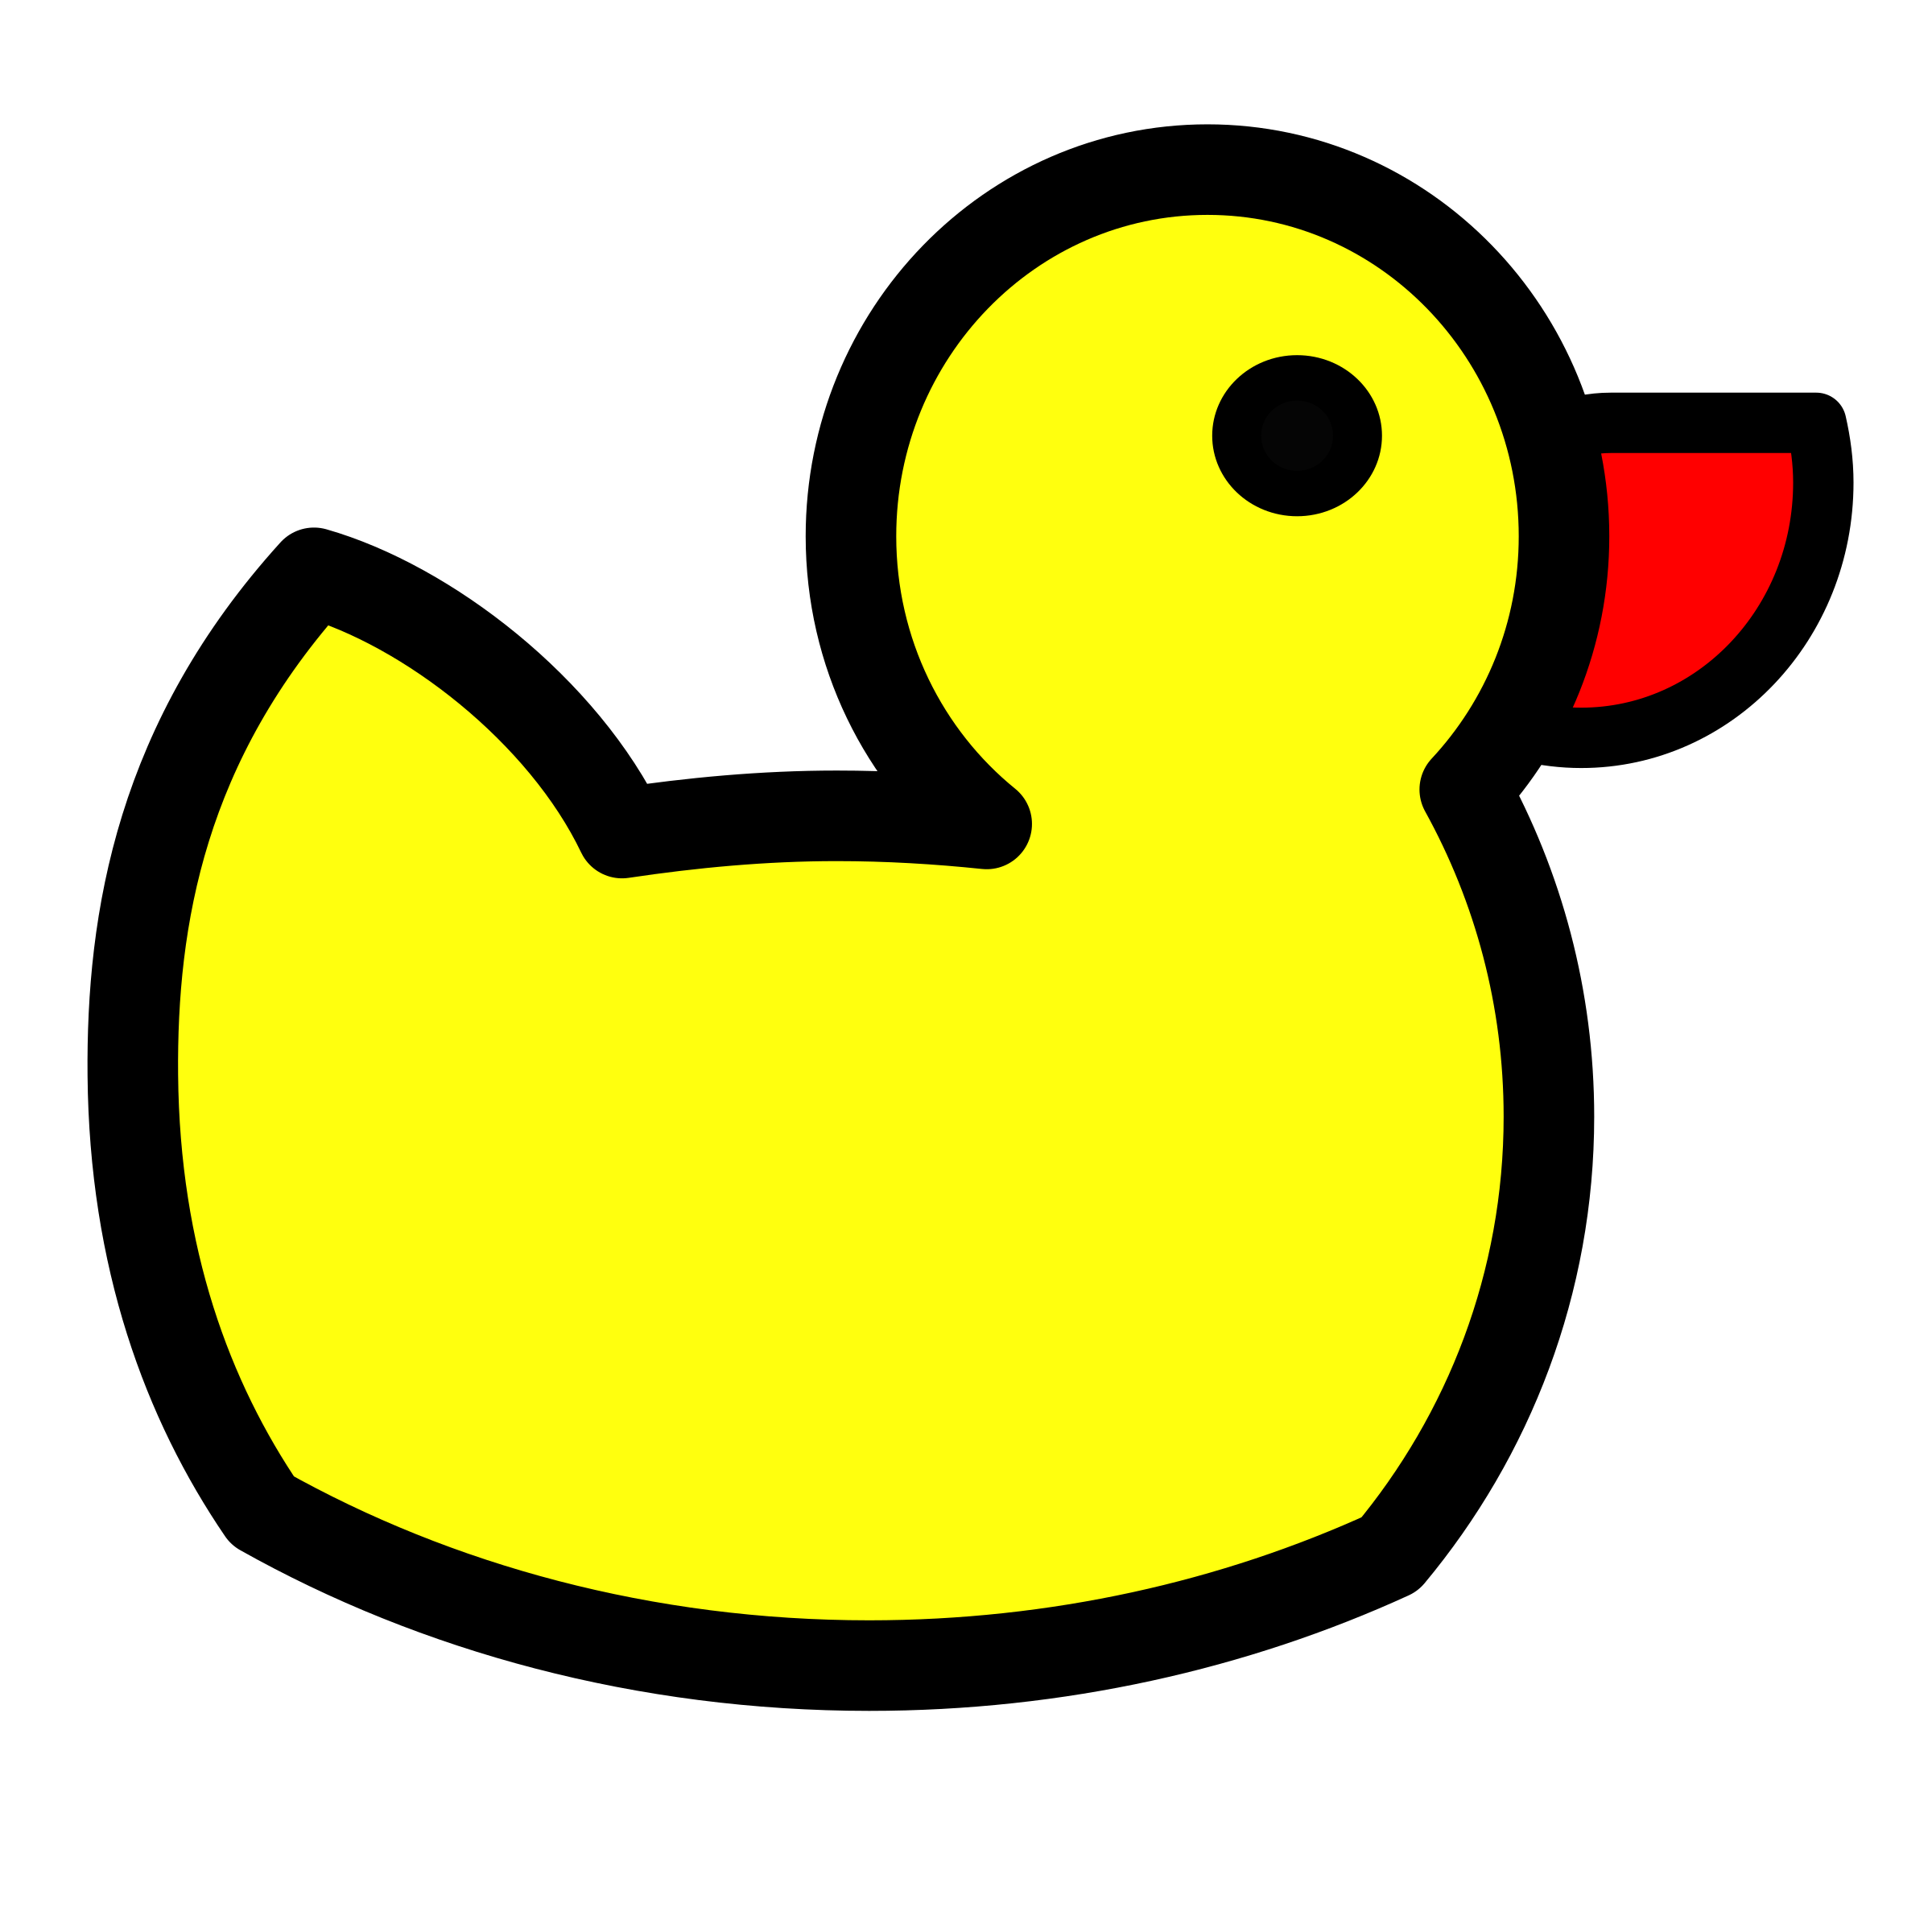 Ducks clipart simple. Ducky icon big image